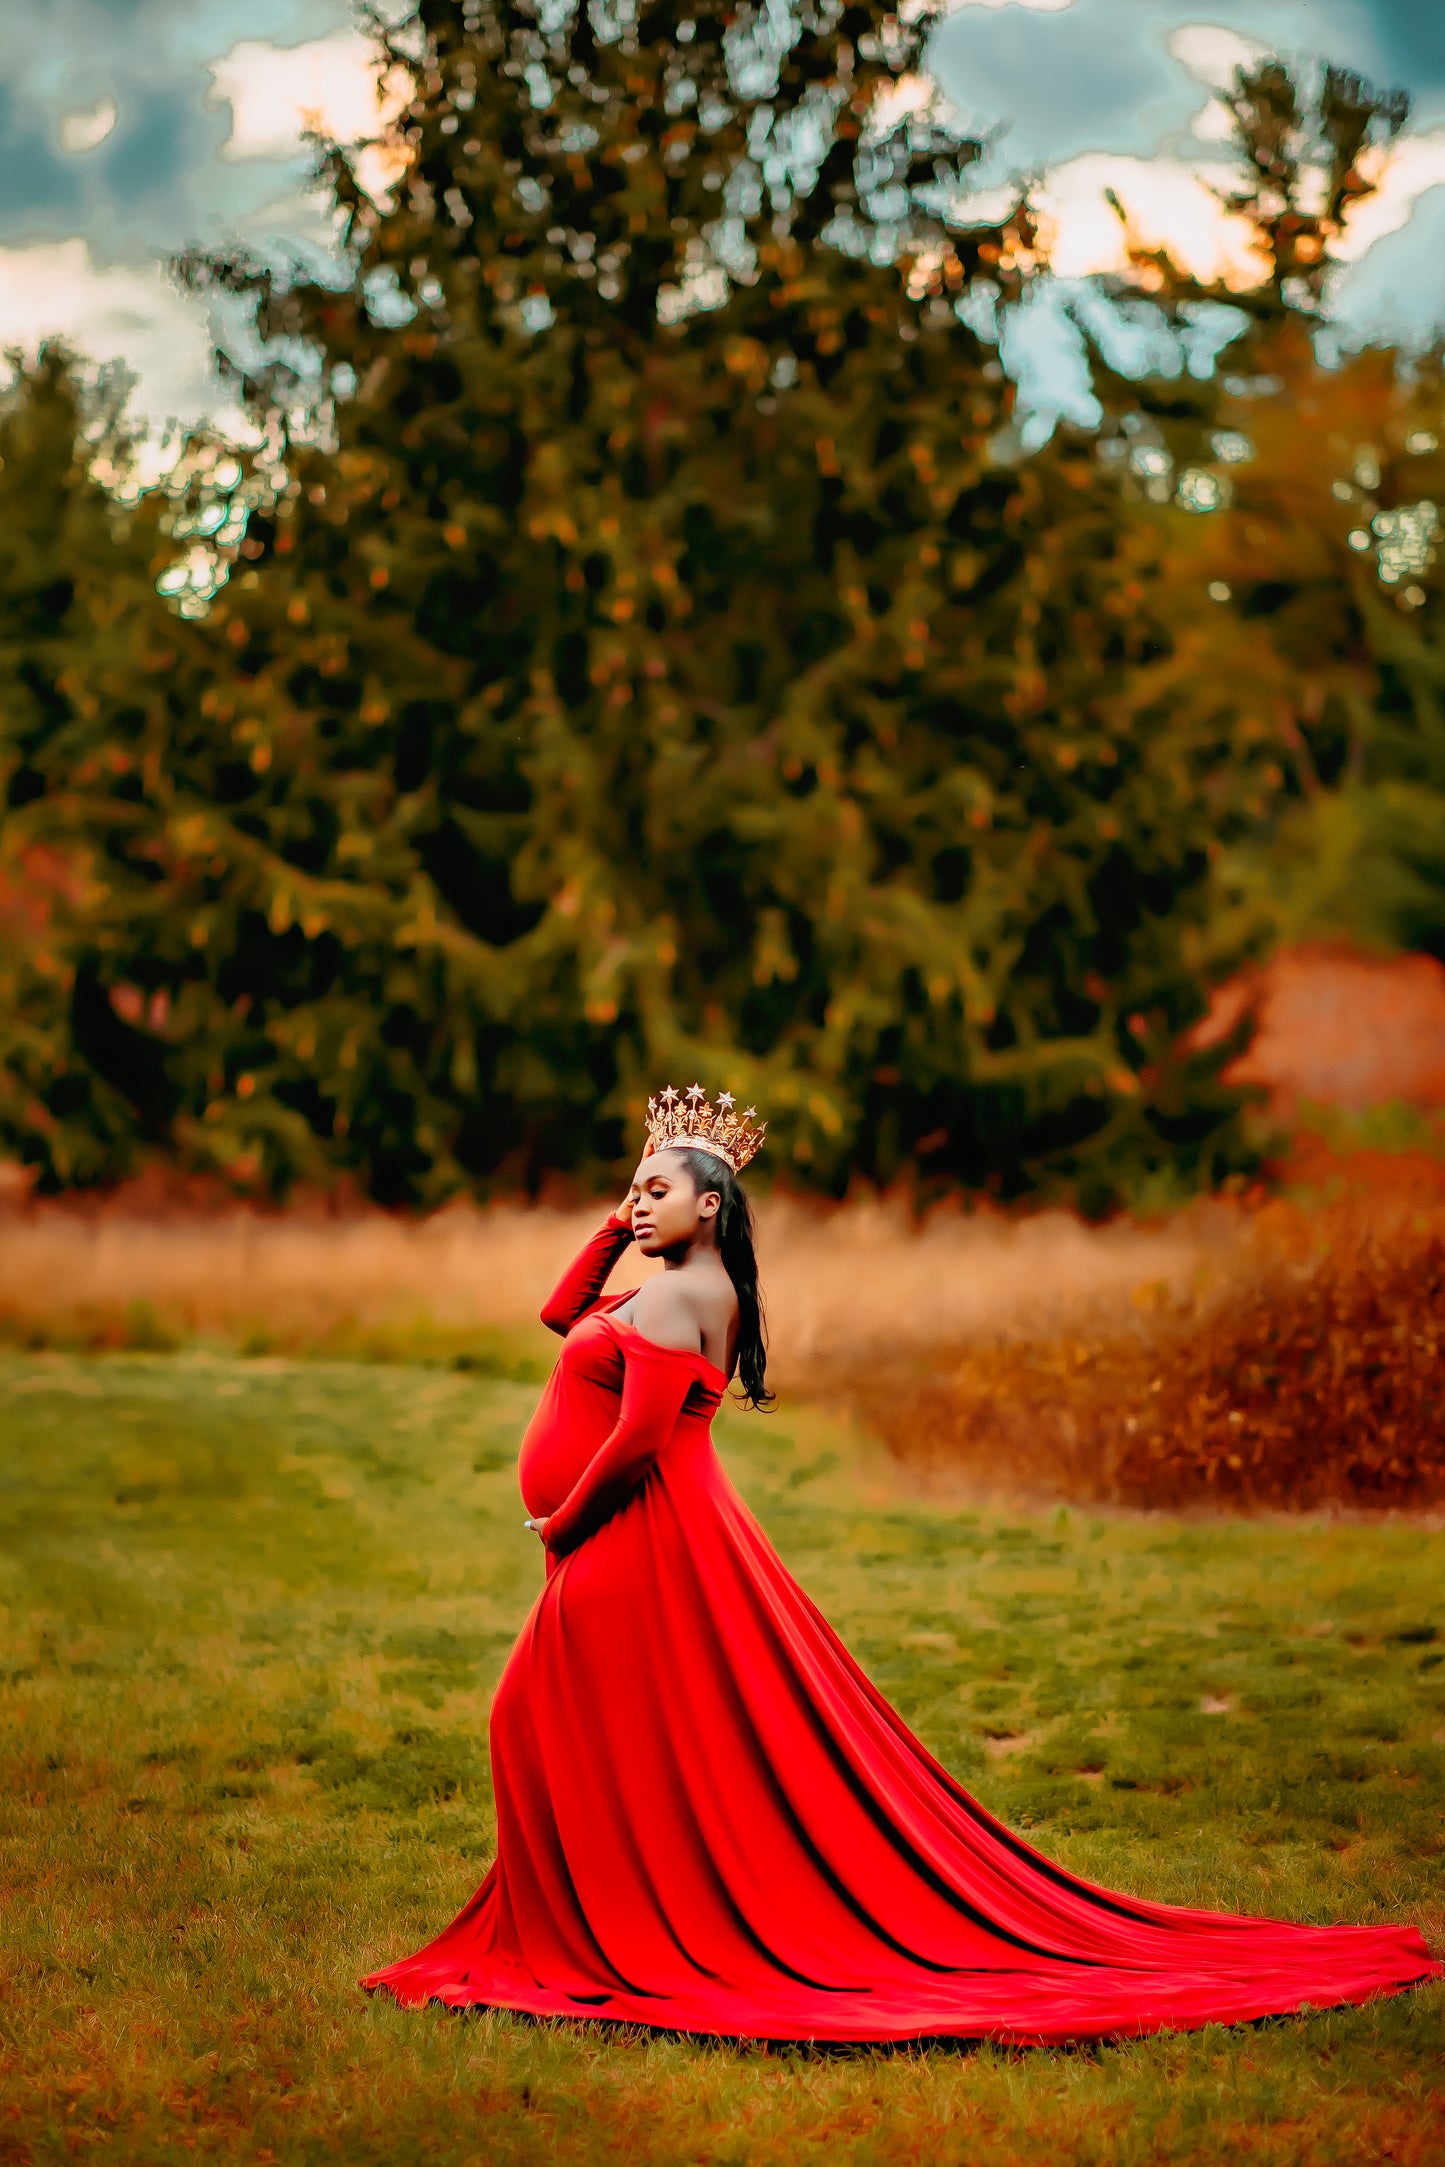 Gold Crown - maternity photoshoot dress